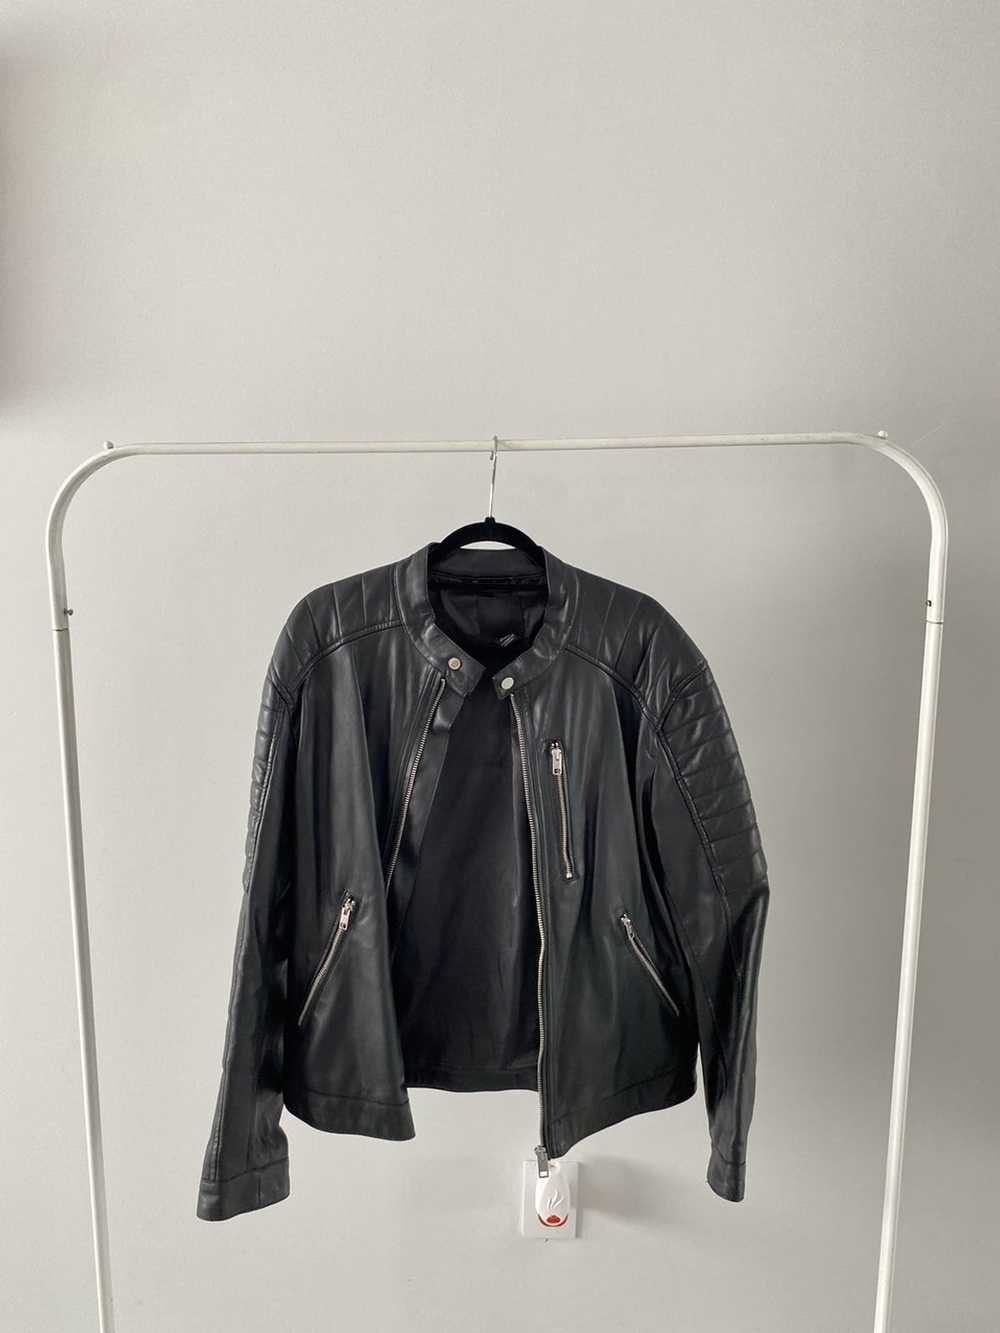 H&M H&M Leather Jacket - image 1